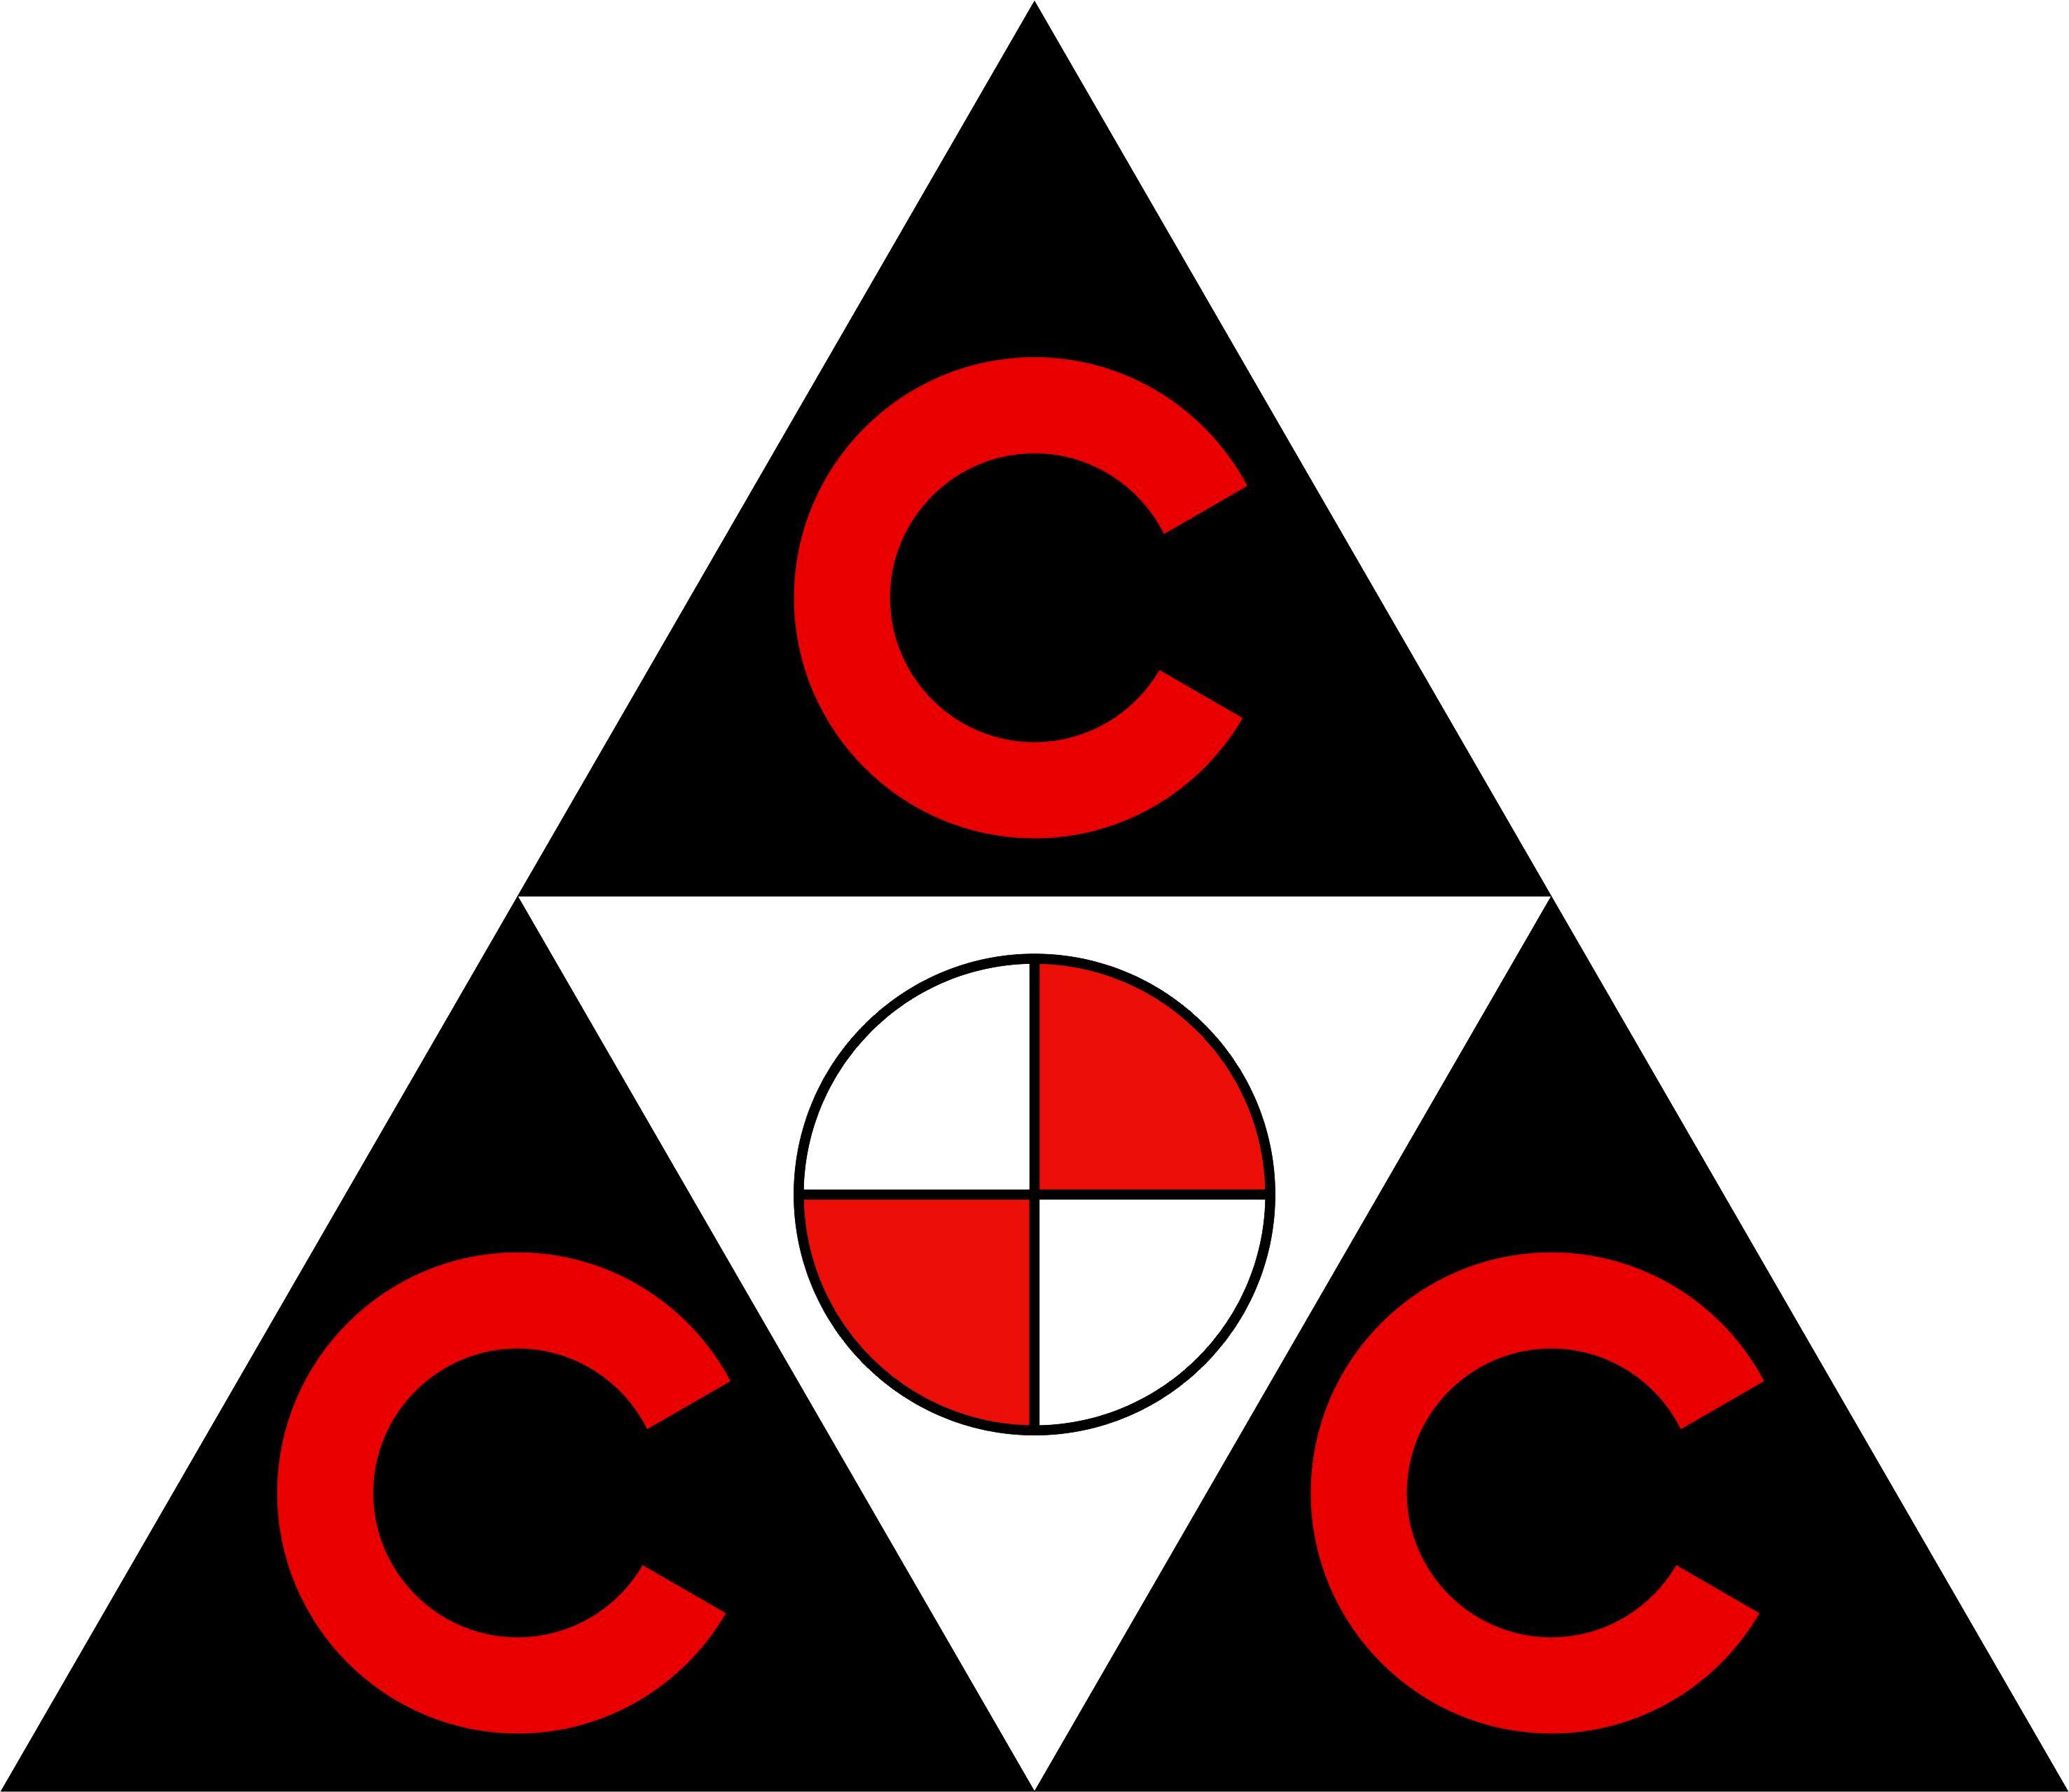 CCC Logo - CCC Logo (HigherRes) - Palmusic